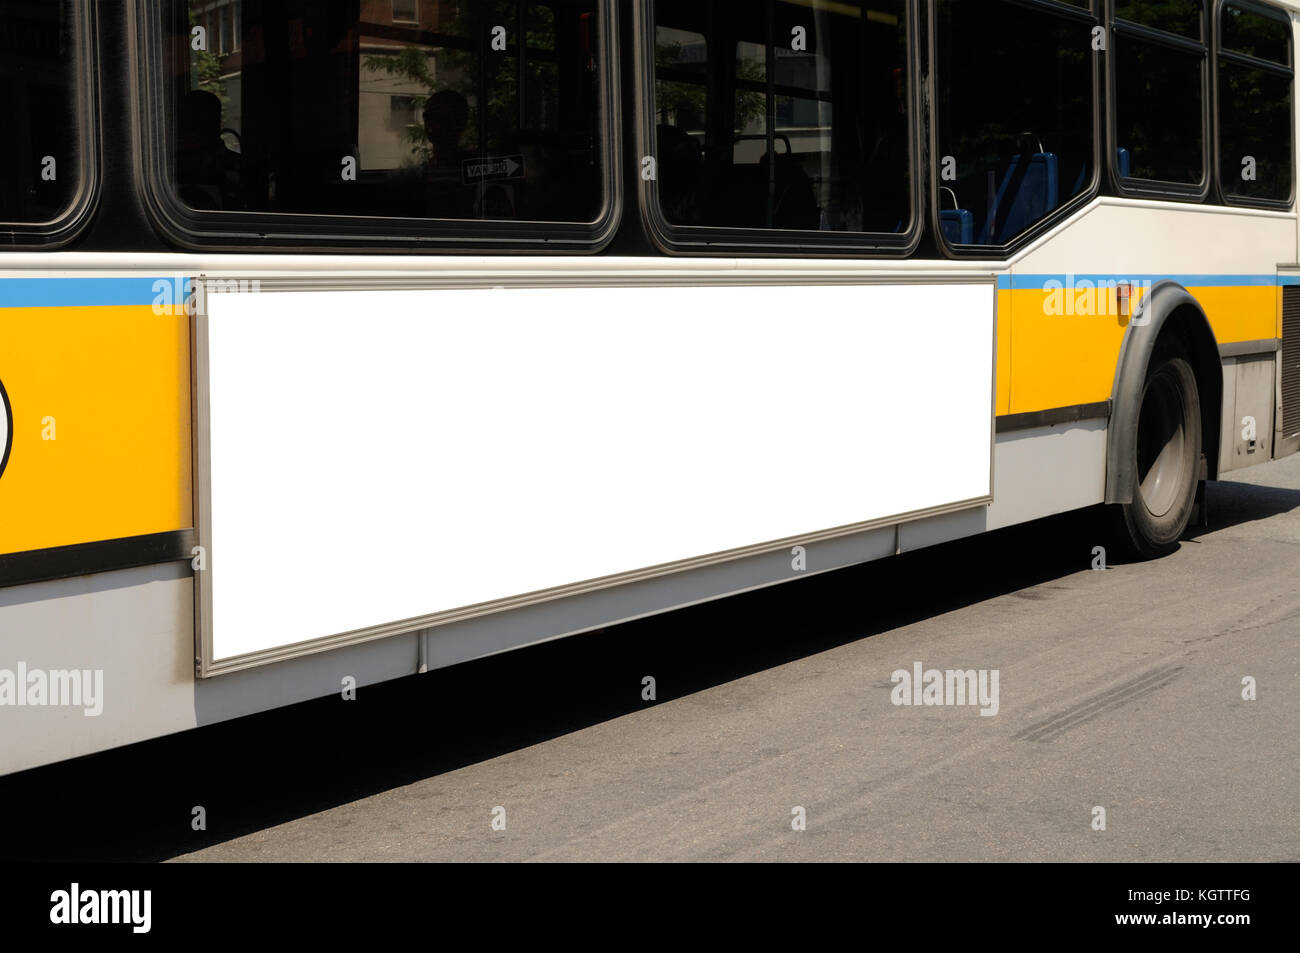 Bus advertising. Blank billboard on bus side panel. Stock Photo